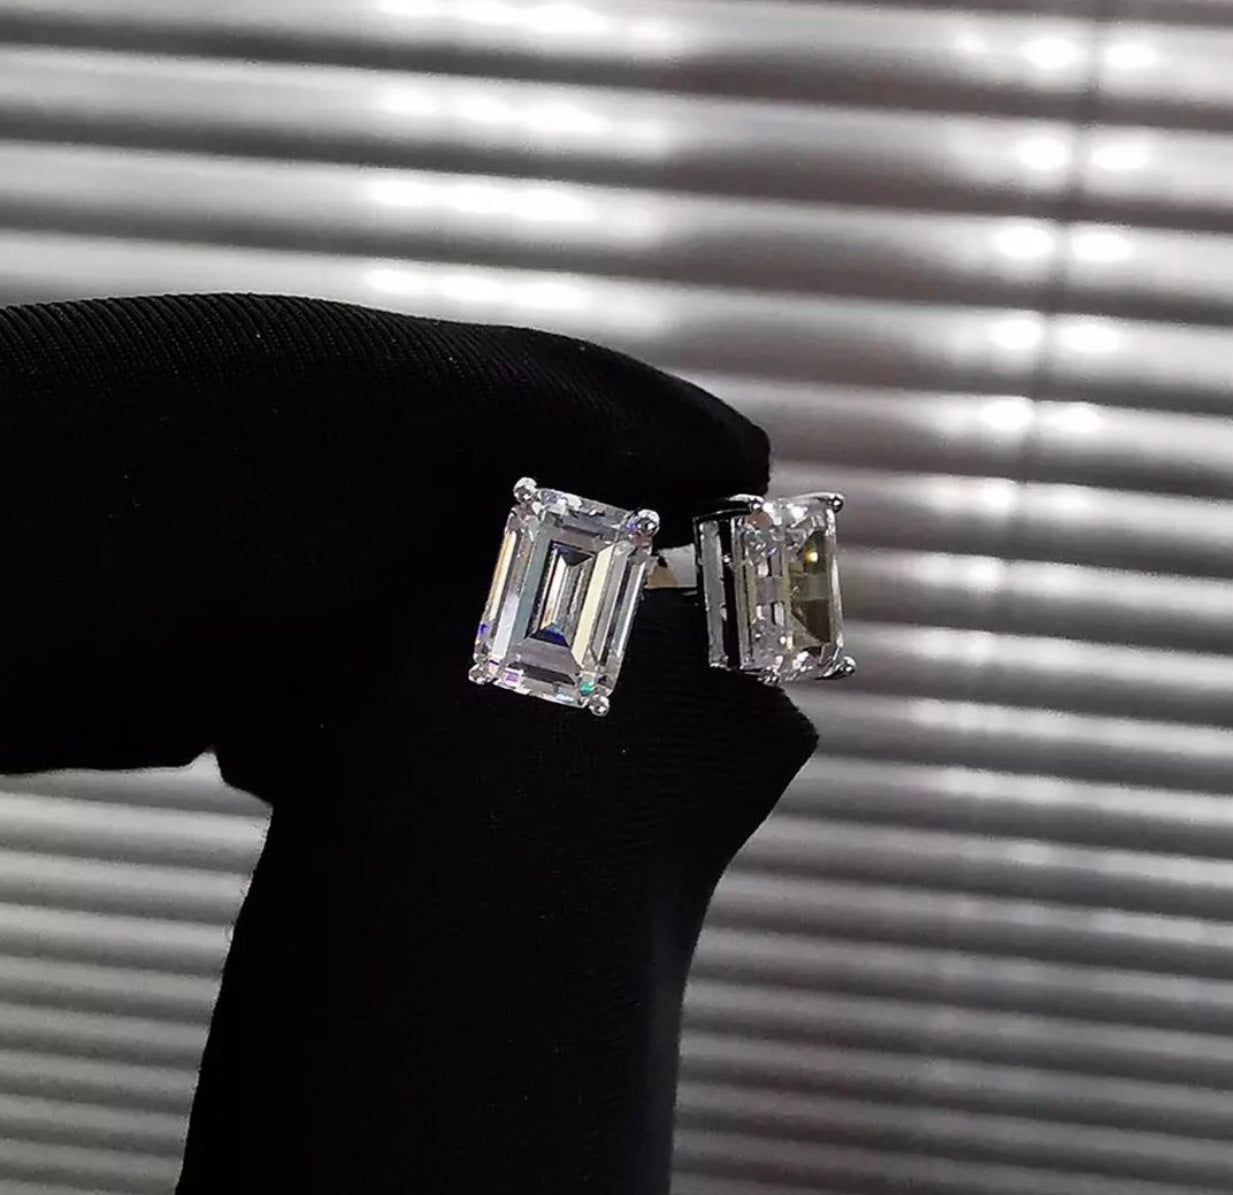 Customized Stud Moissanite Diamond Earrings (3 sets)